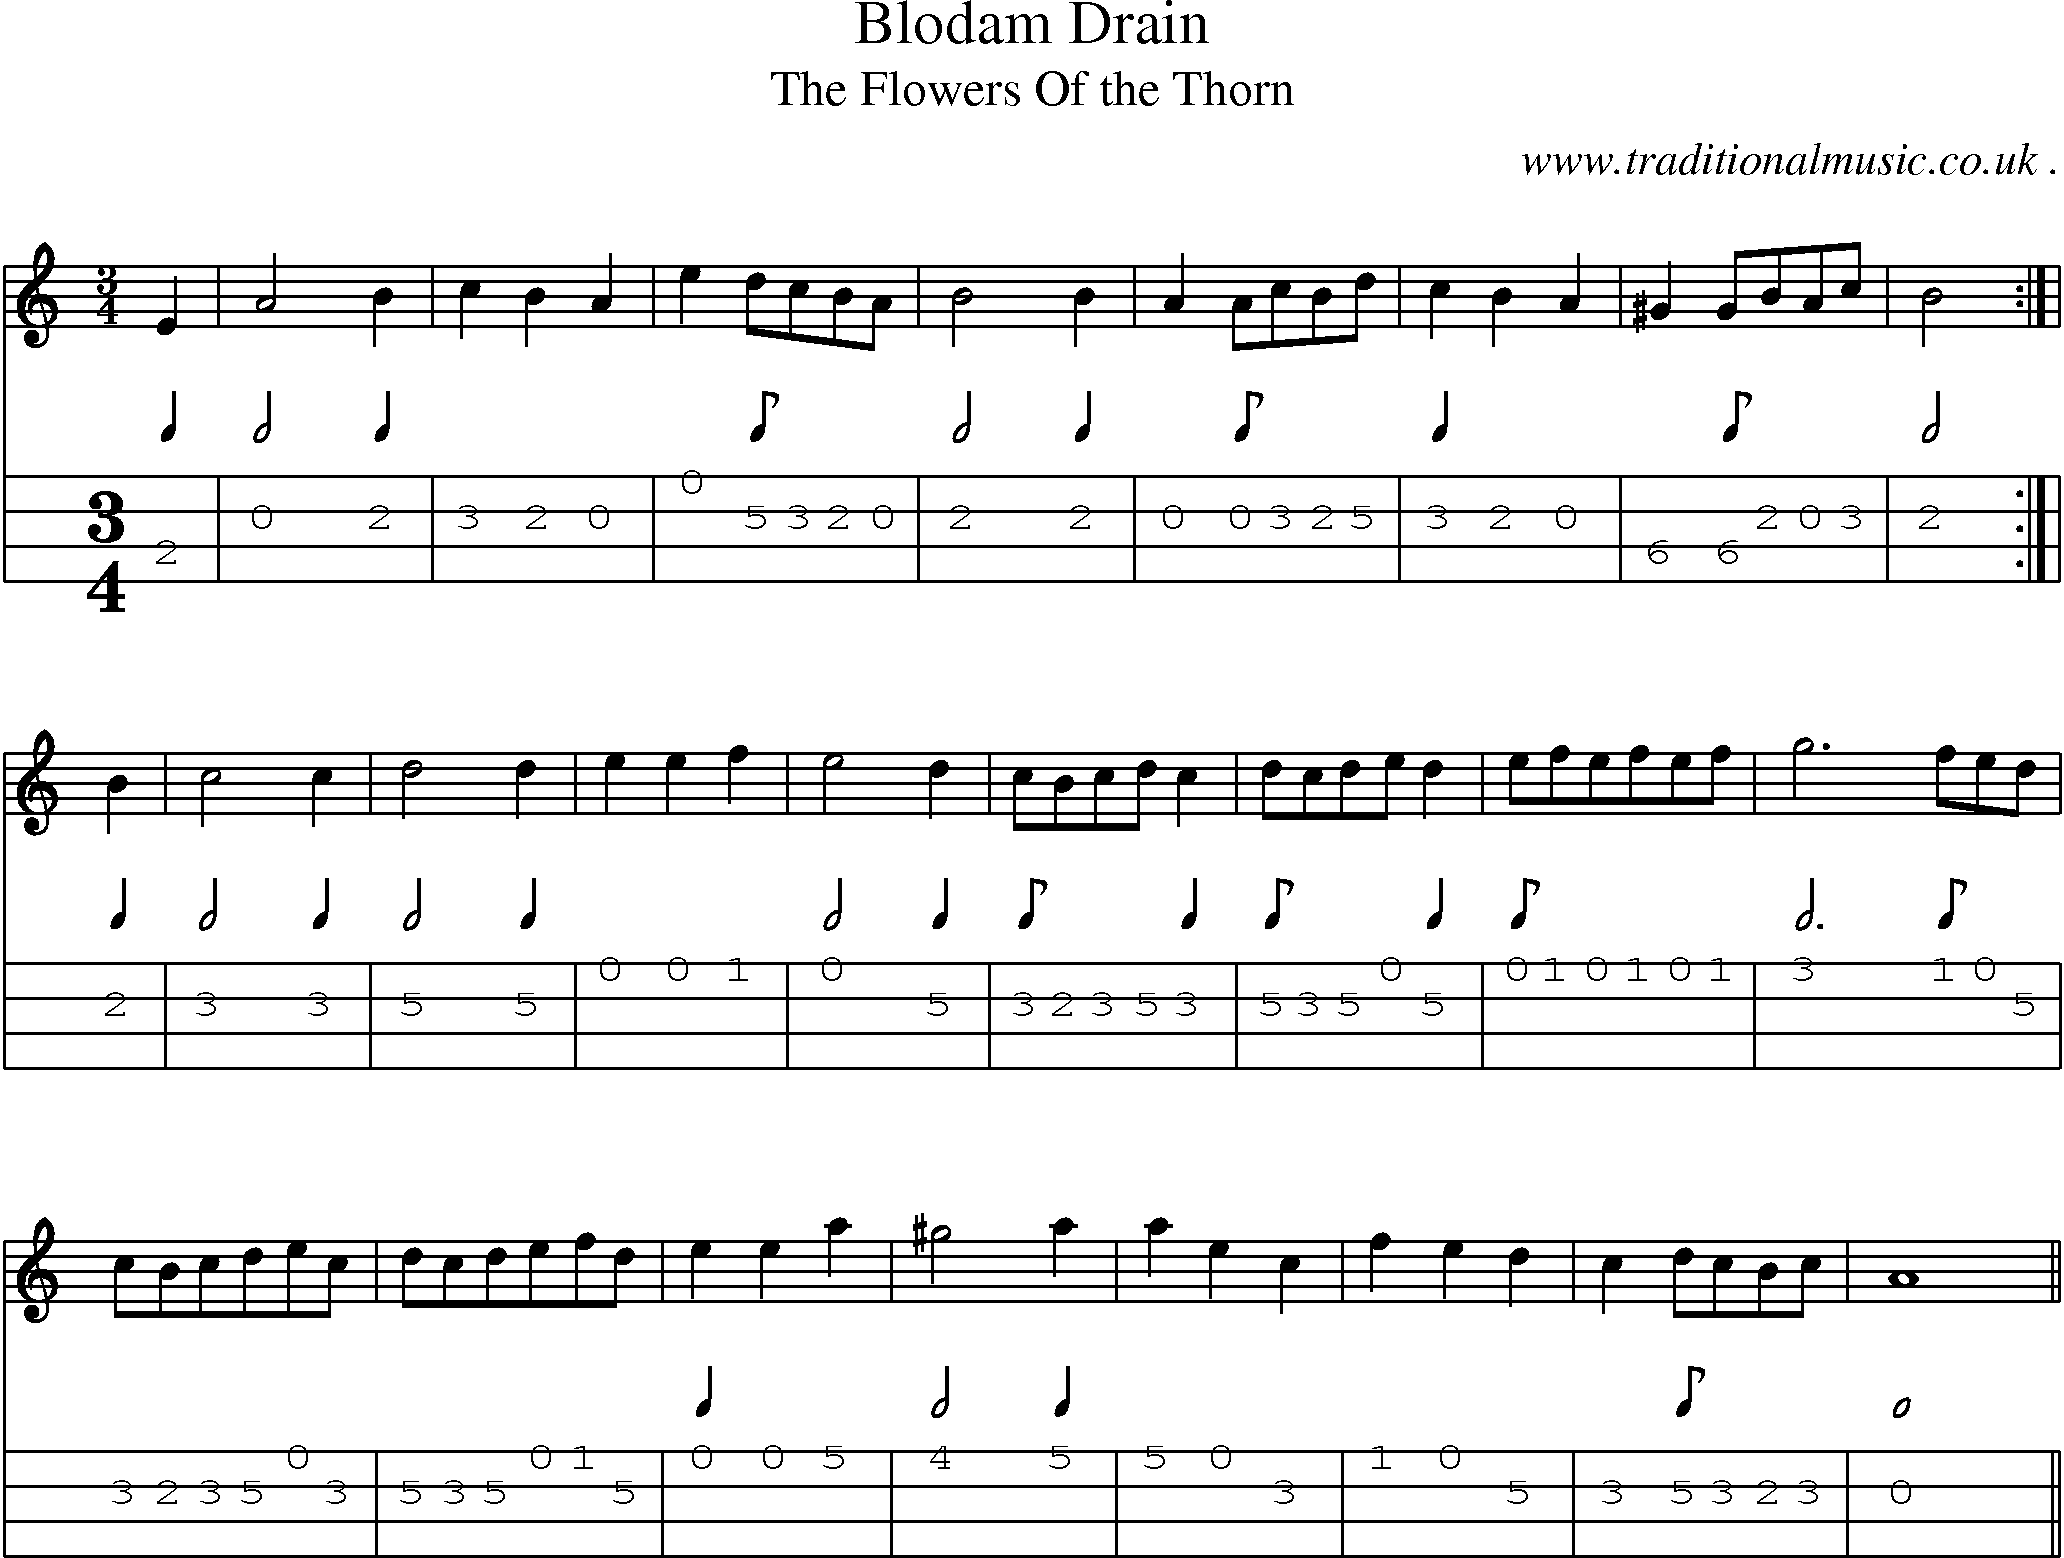 Sheet-Music and Mandolin Tabs for Blodam Drain